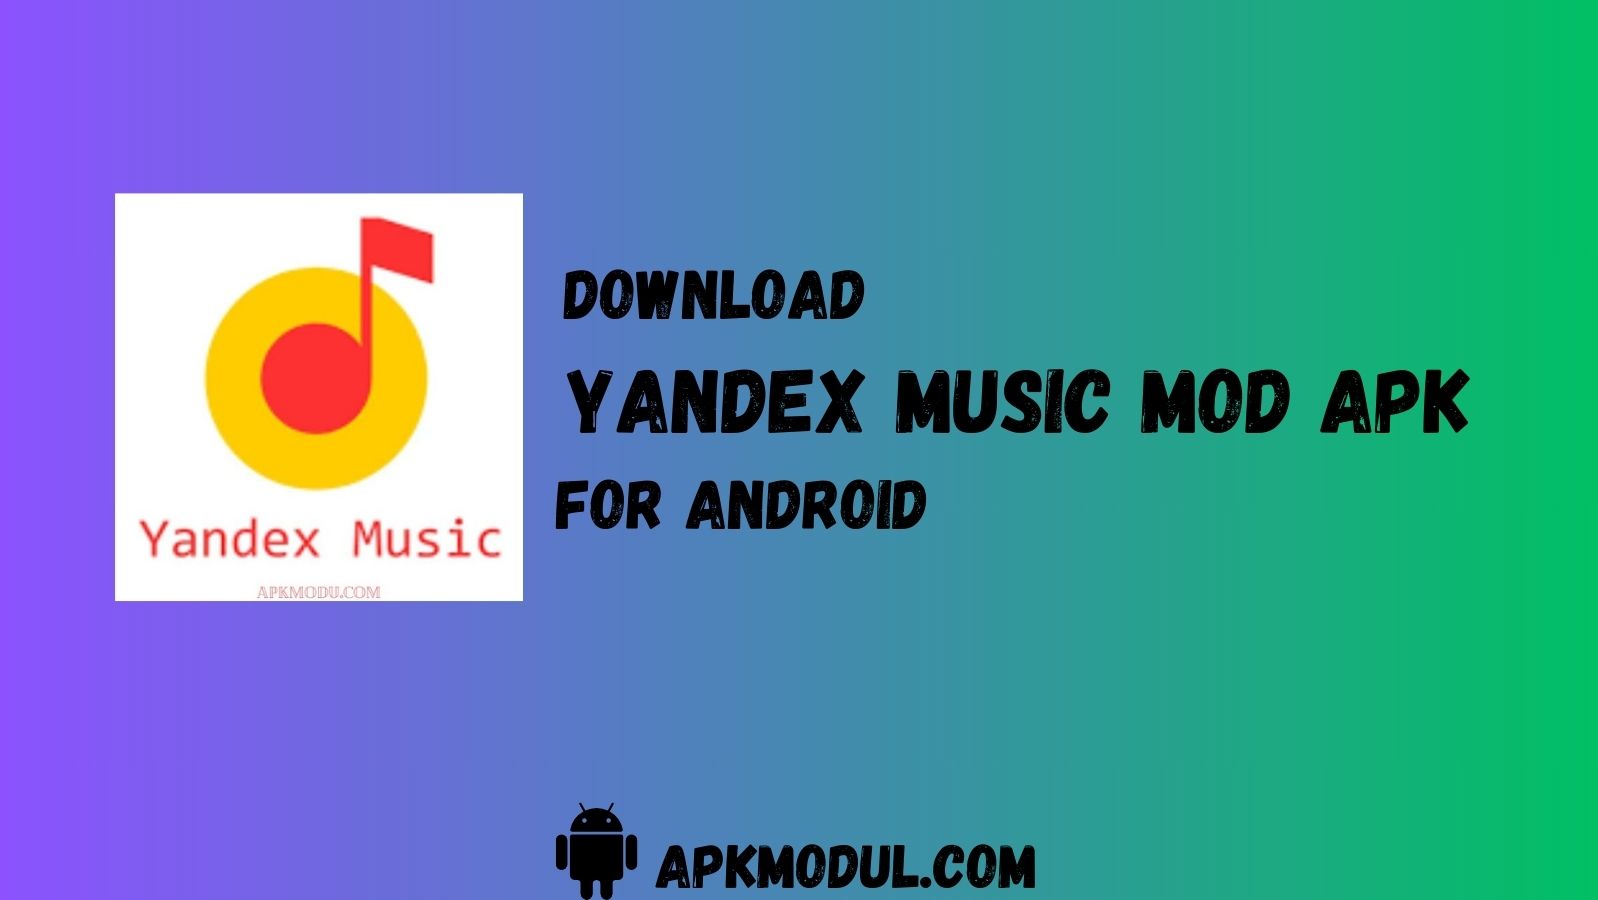 Yandex Music MOD App